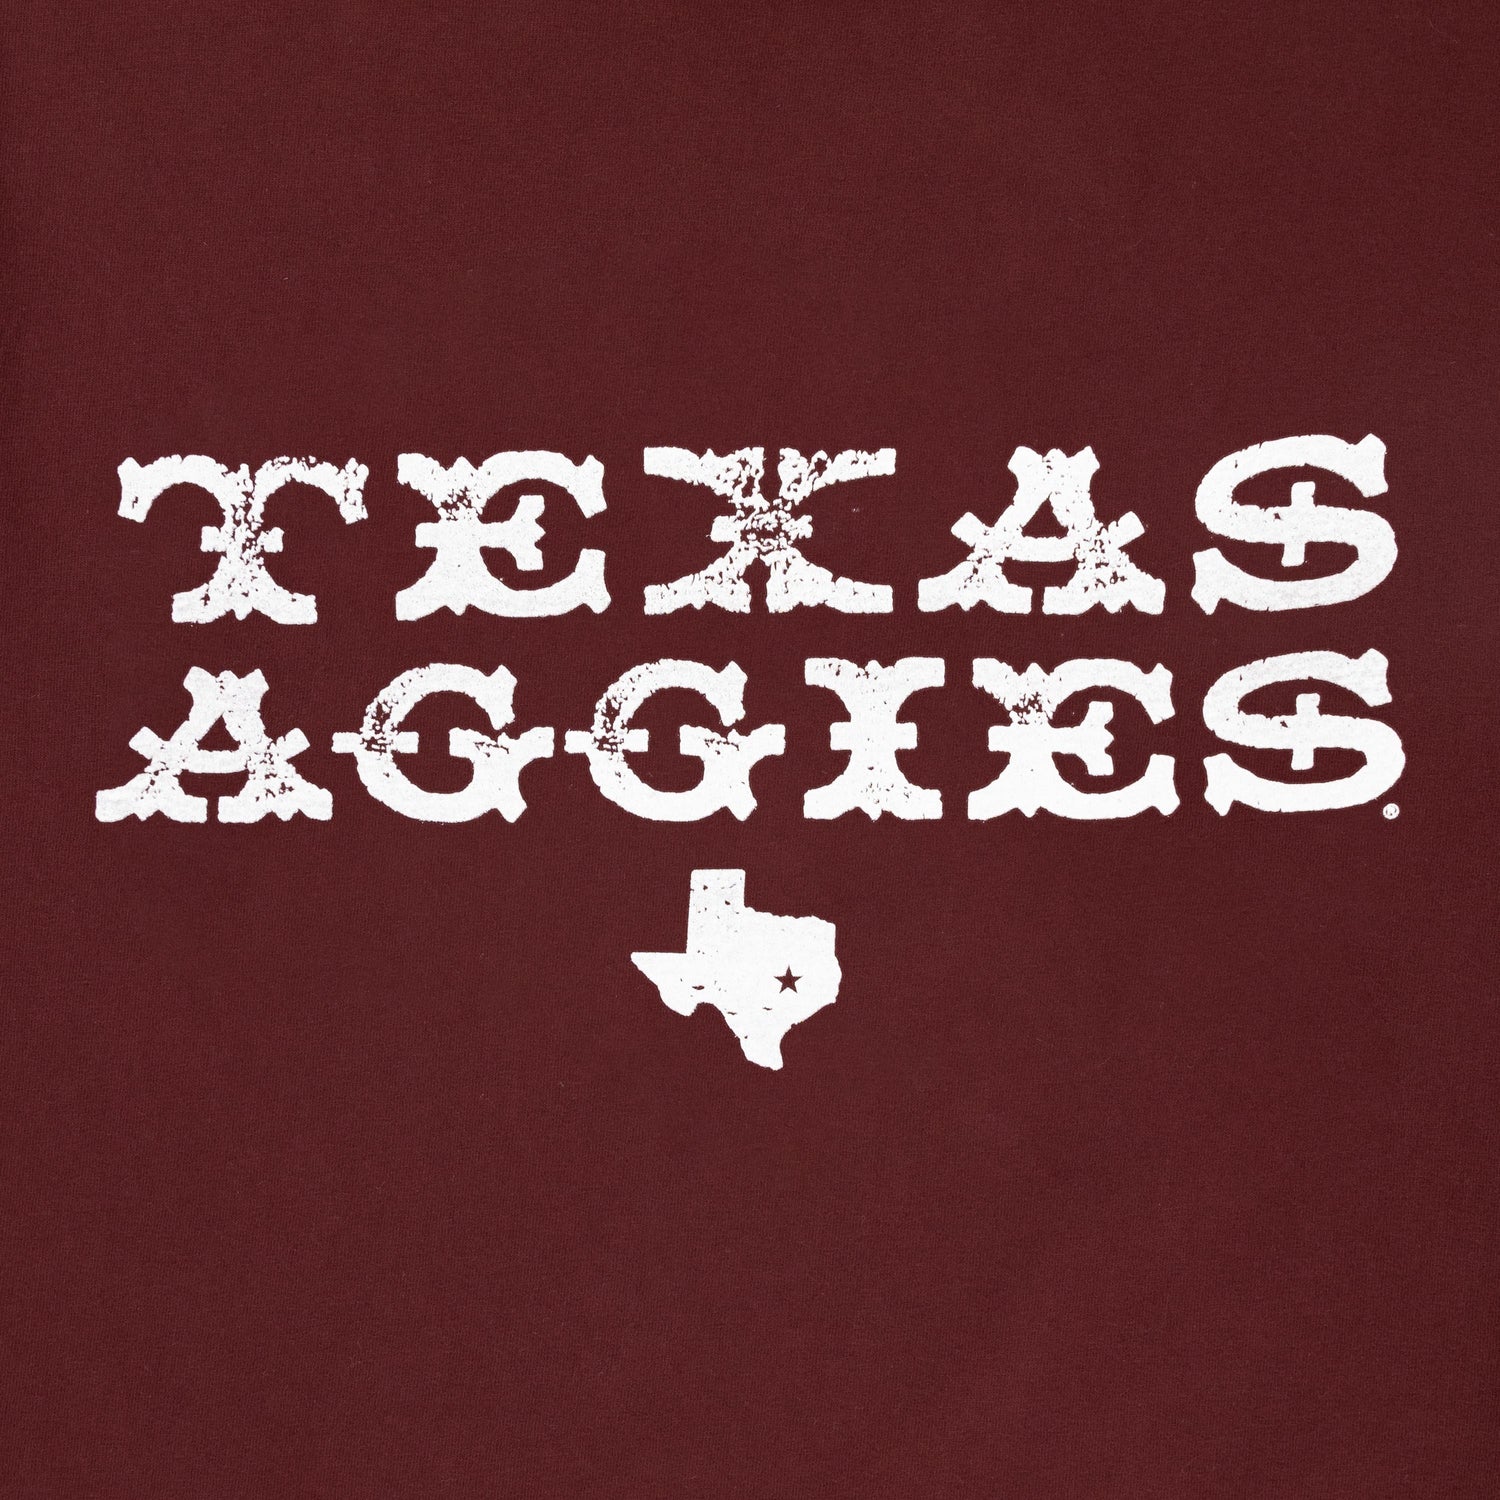 Western Texas Aggies